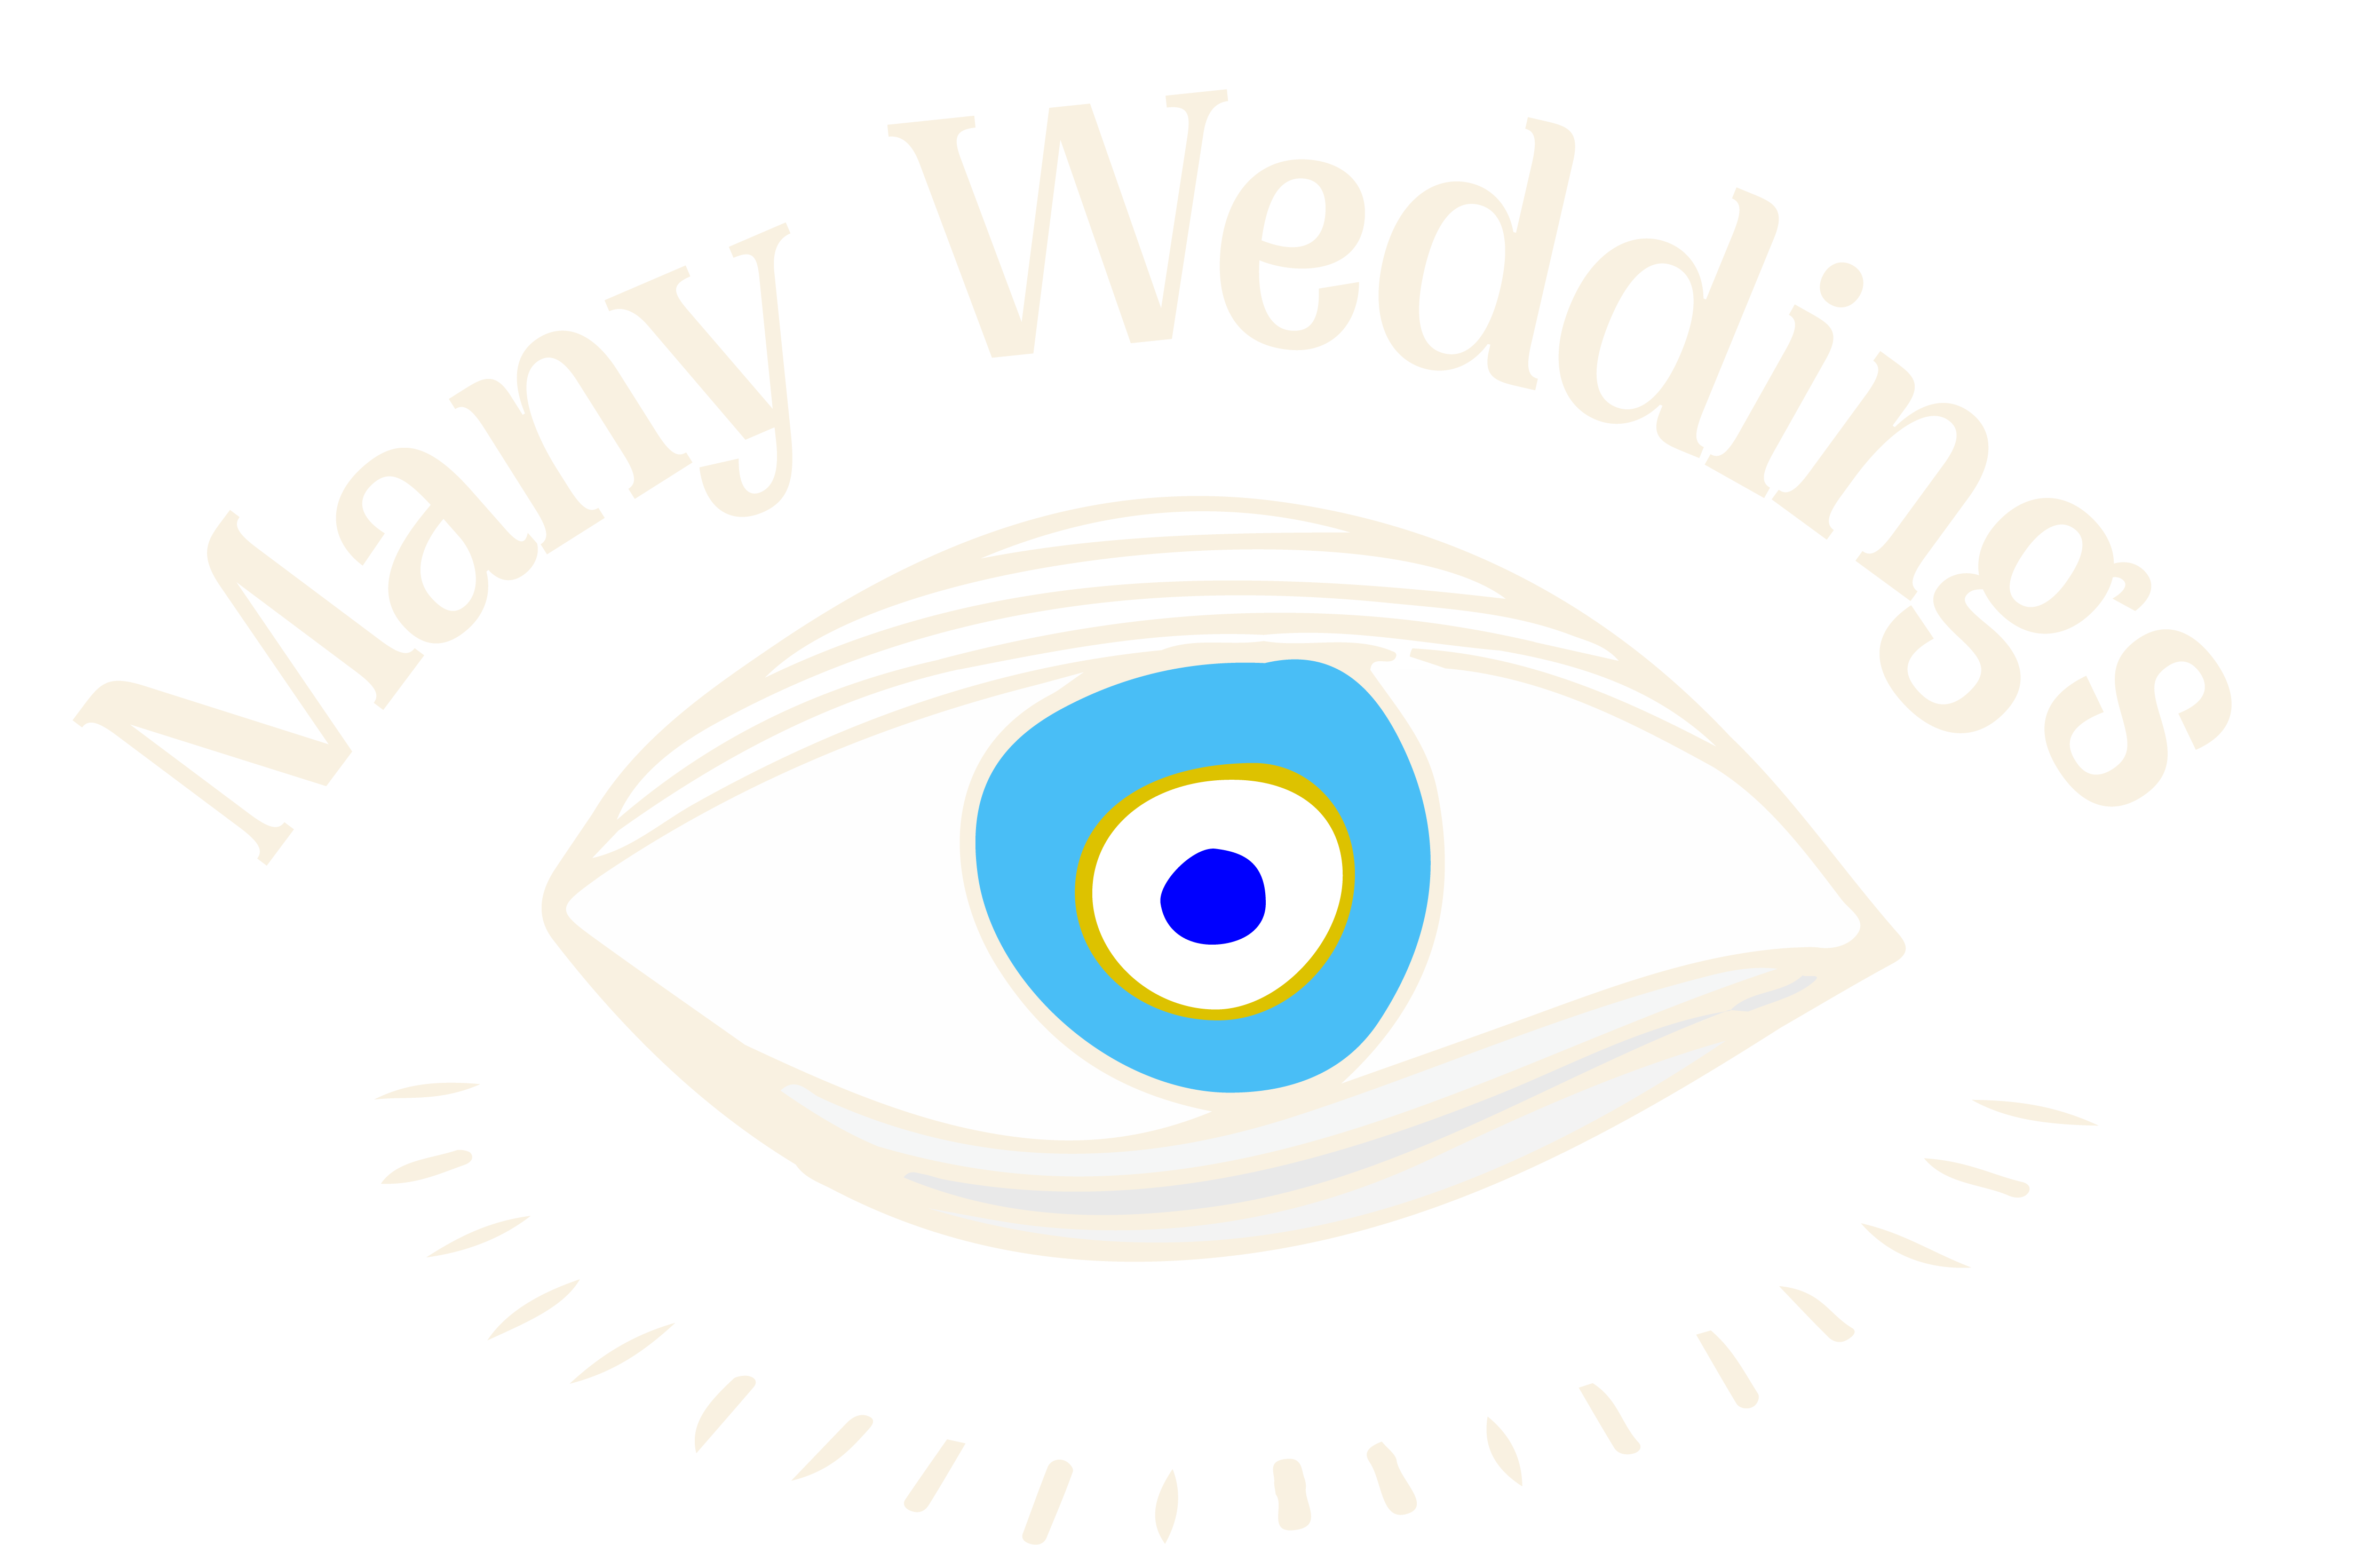 Many Weddings